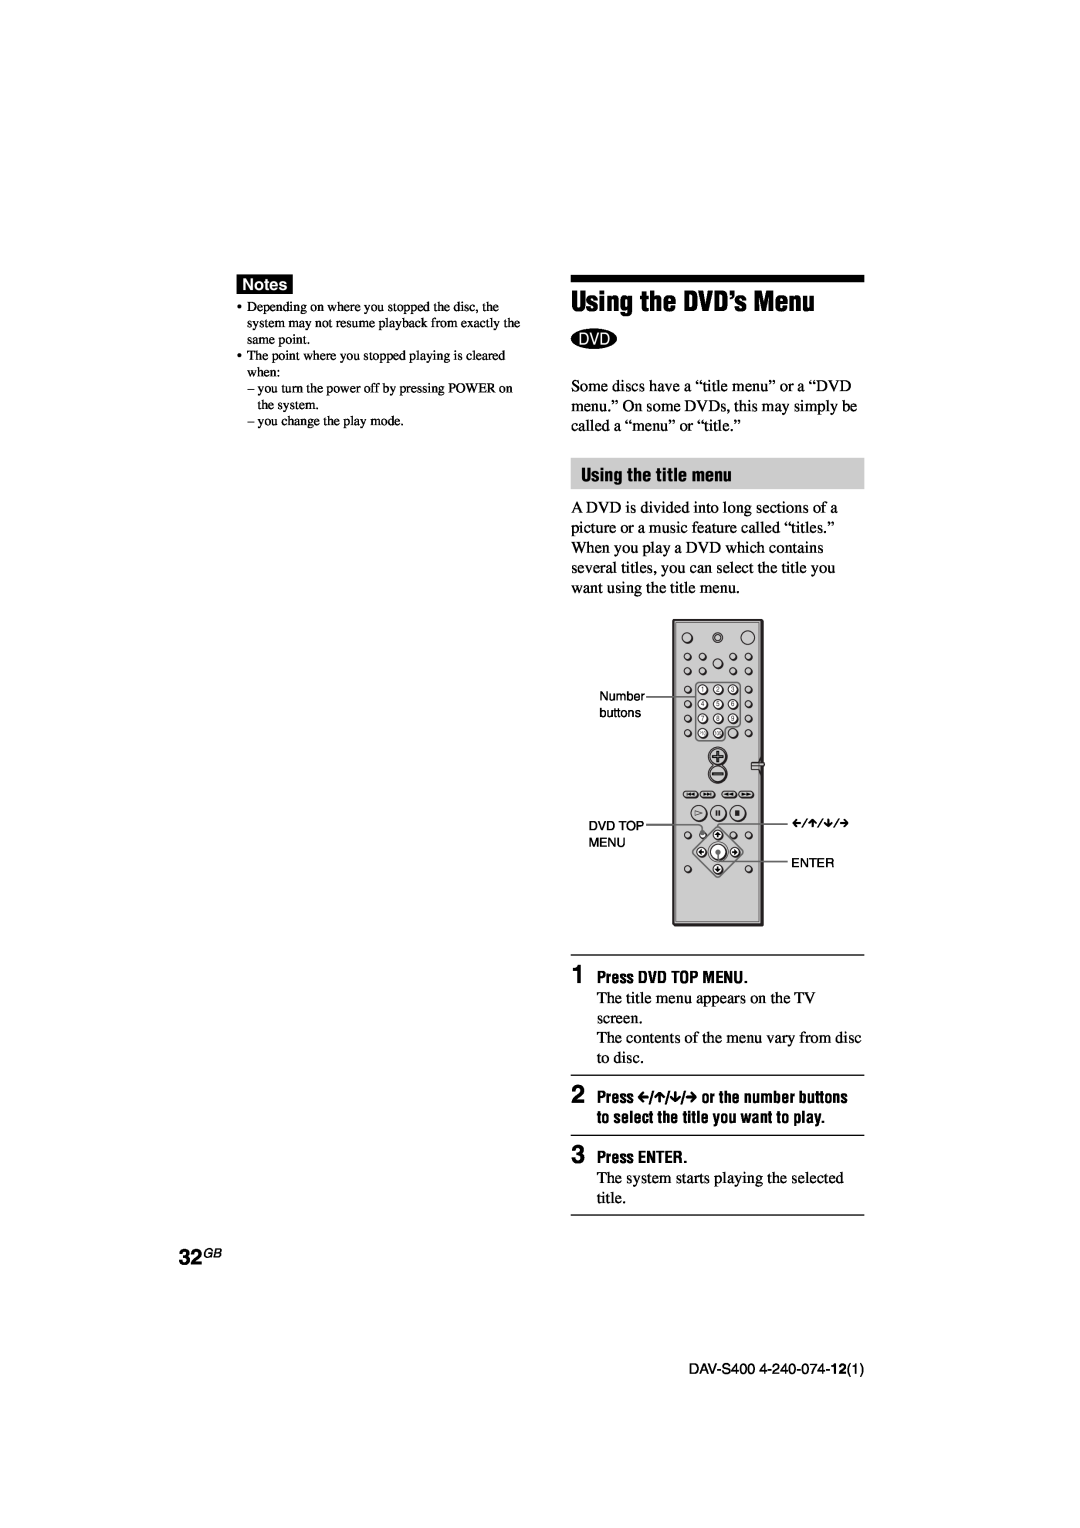 Sony DAV-S400 manual Using the DVD’s Menu, 32GB, Using the title menu, Press DVD TOP MENU, Press ENTER 